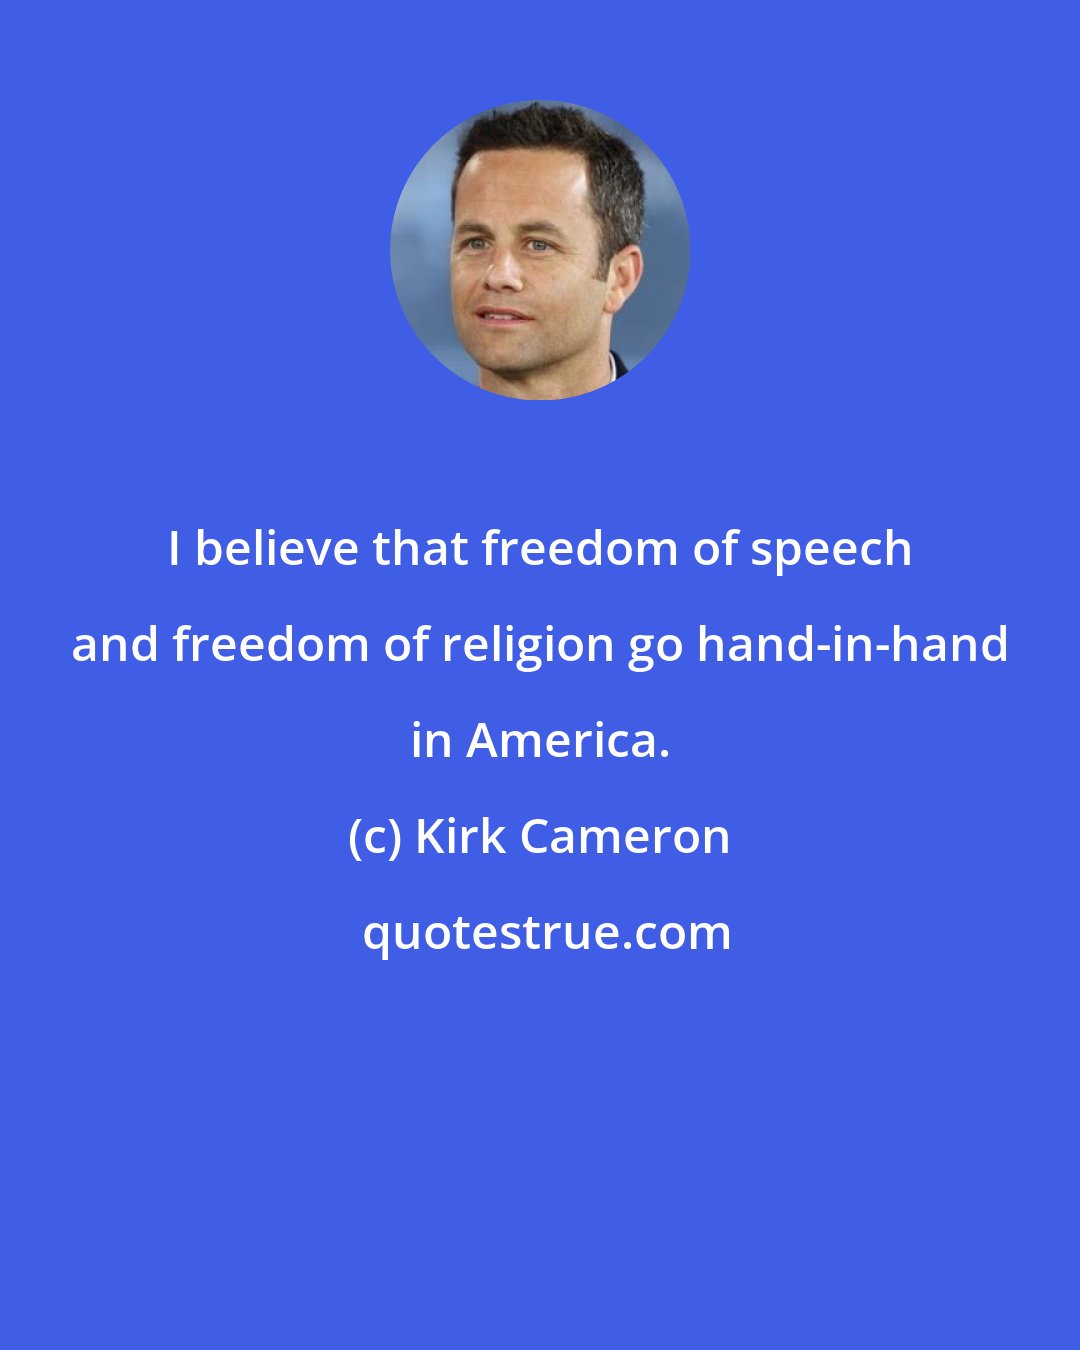 Kirk Cameron: I believe that freedom of speech and freedom of religion go hand-in-hand in America.